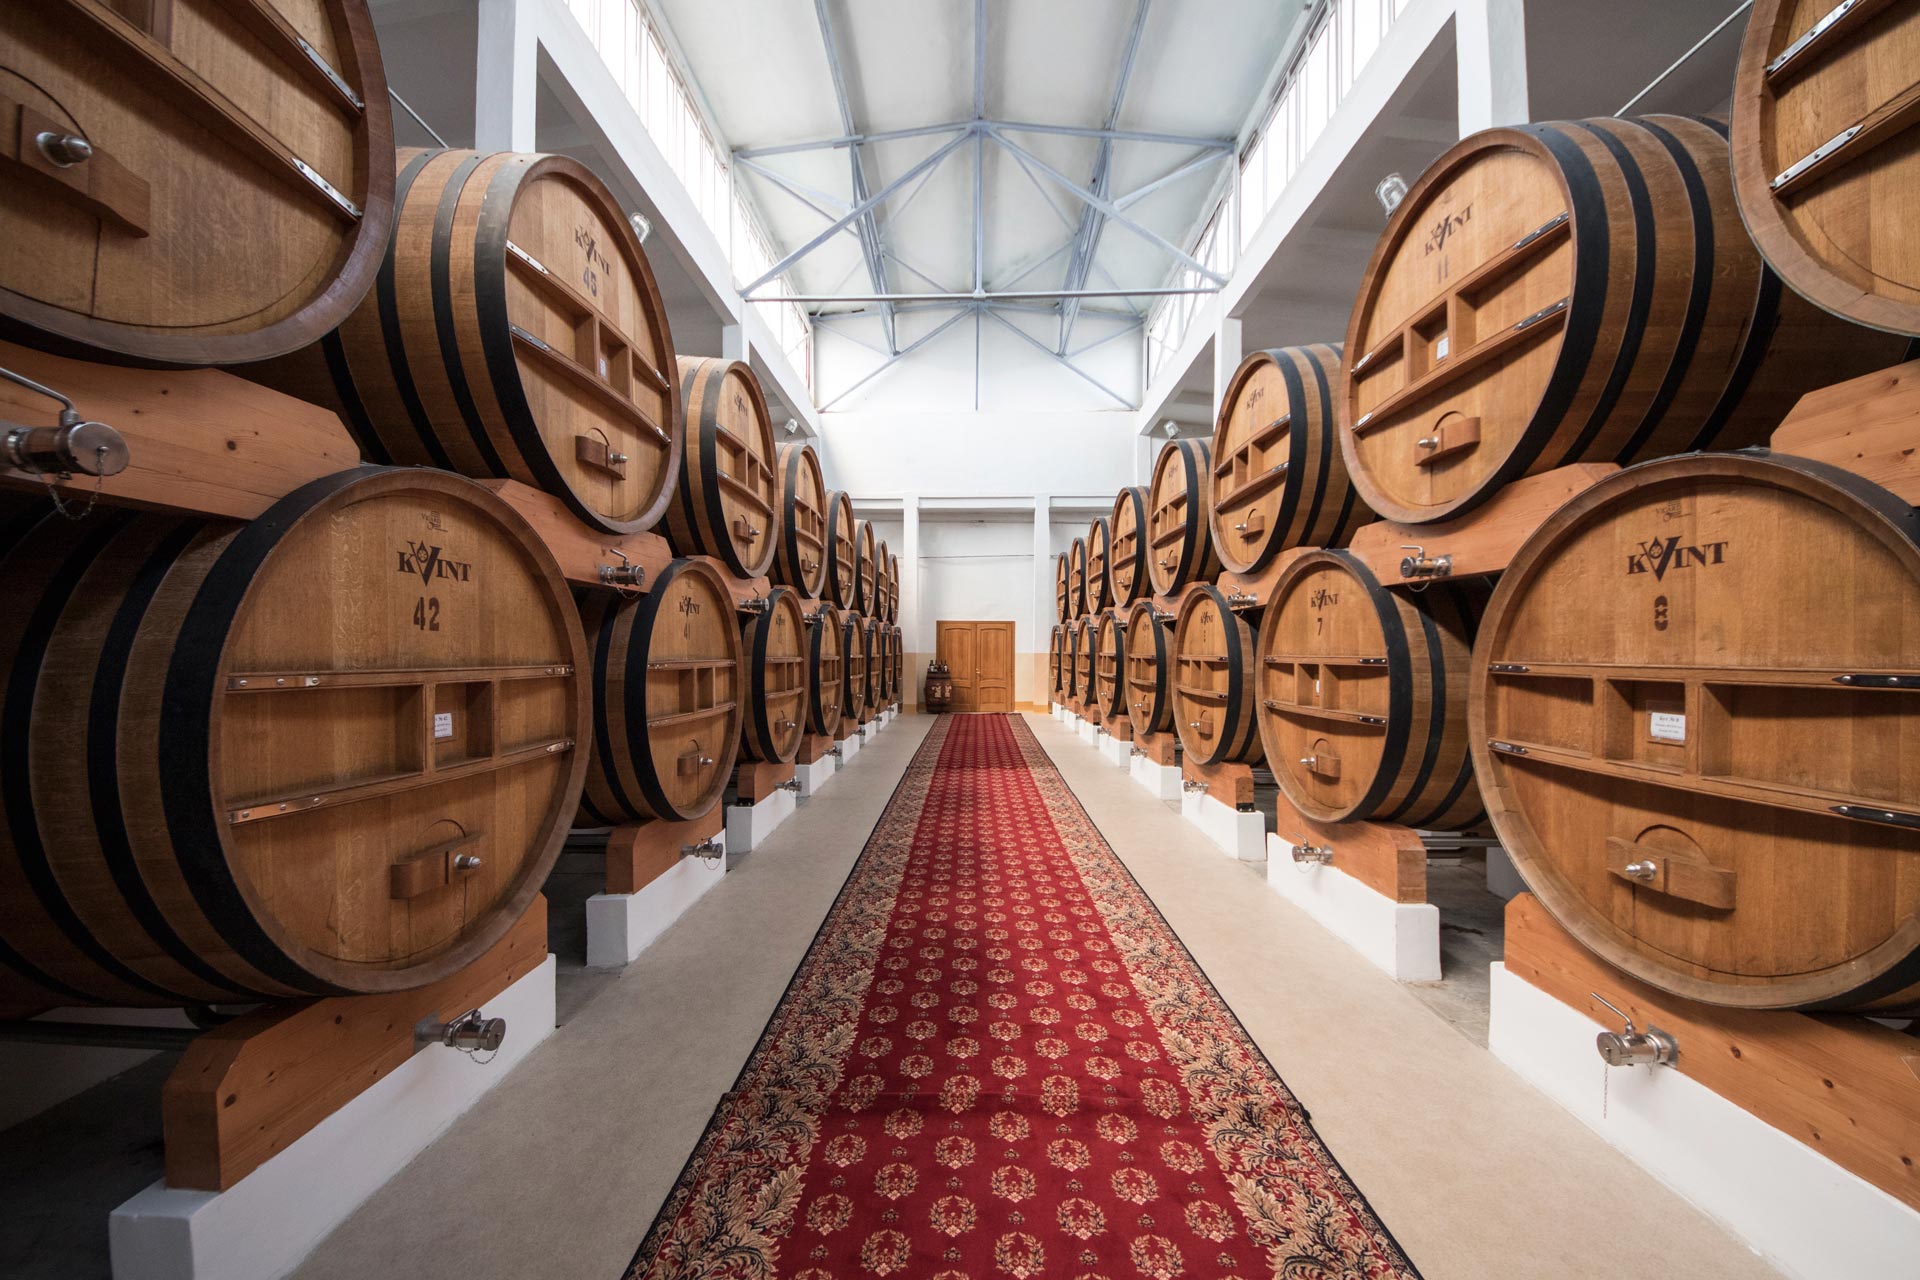 Brandy barrels at Kvint (Kon’iaki, vina i napitki Tiraspol’ia) wine- and brandy distillery, Tiraspol, Transnistria, Moldova